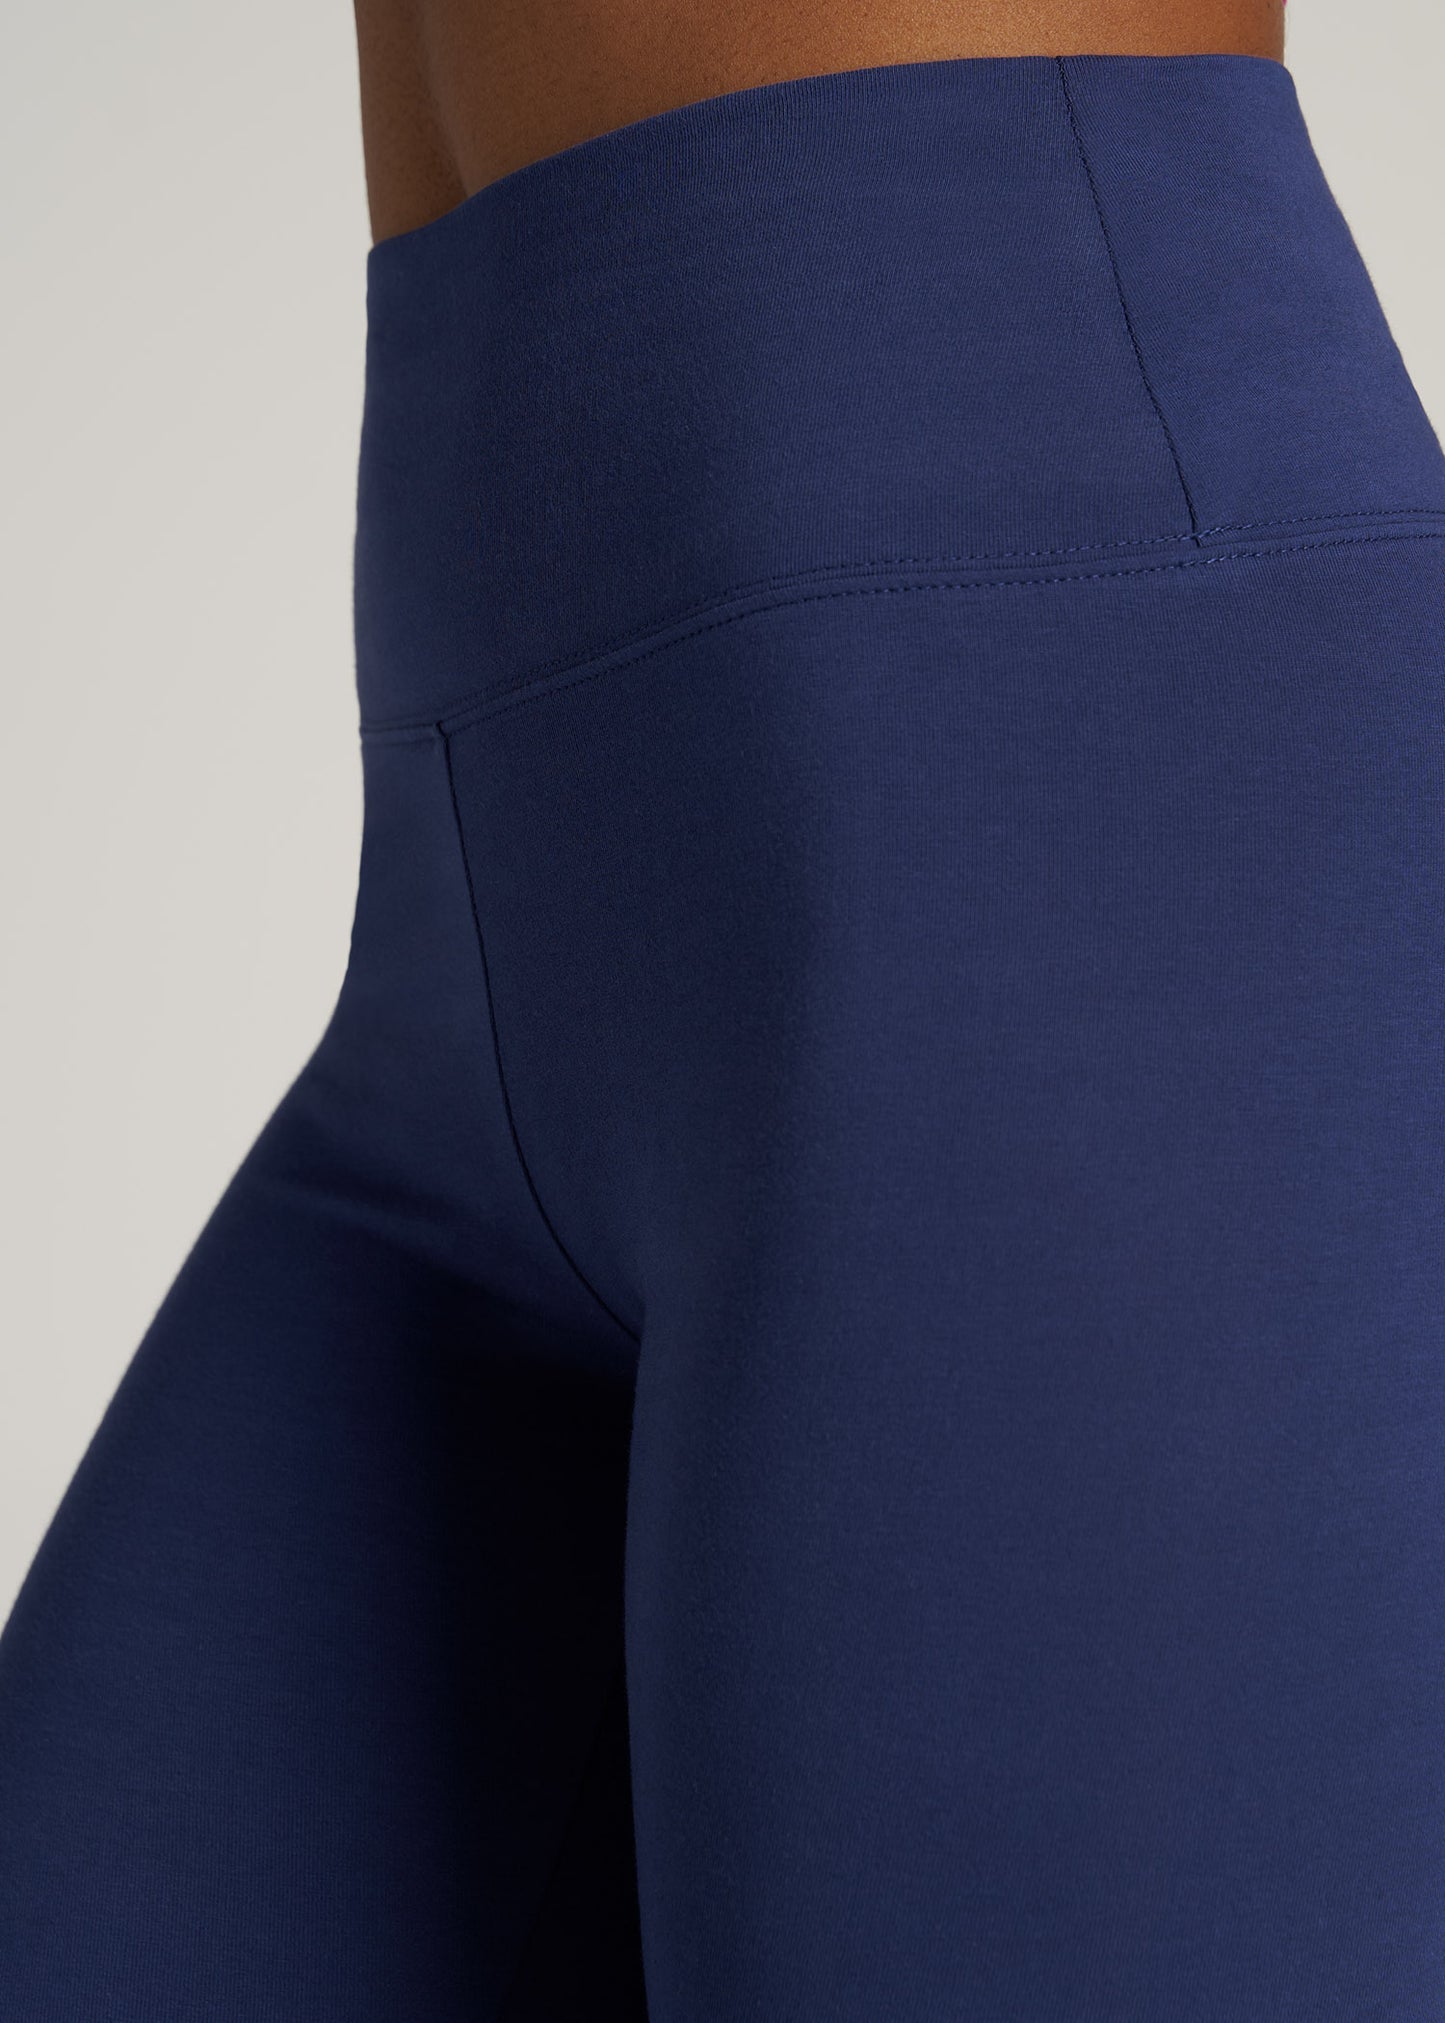 Bella Outer-Pocket Tall Women's Legging in Midnight Blue